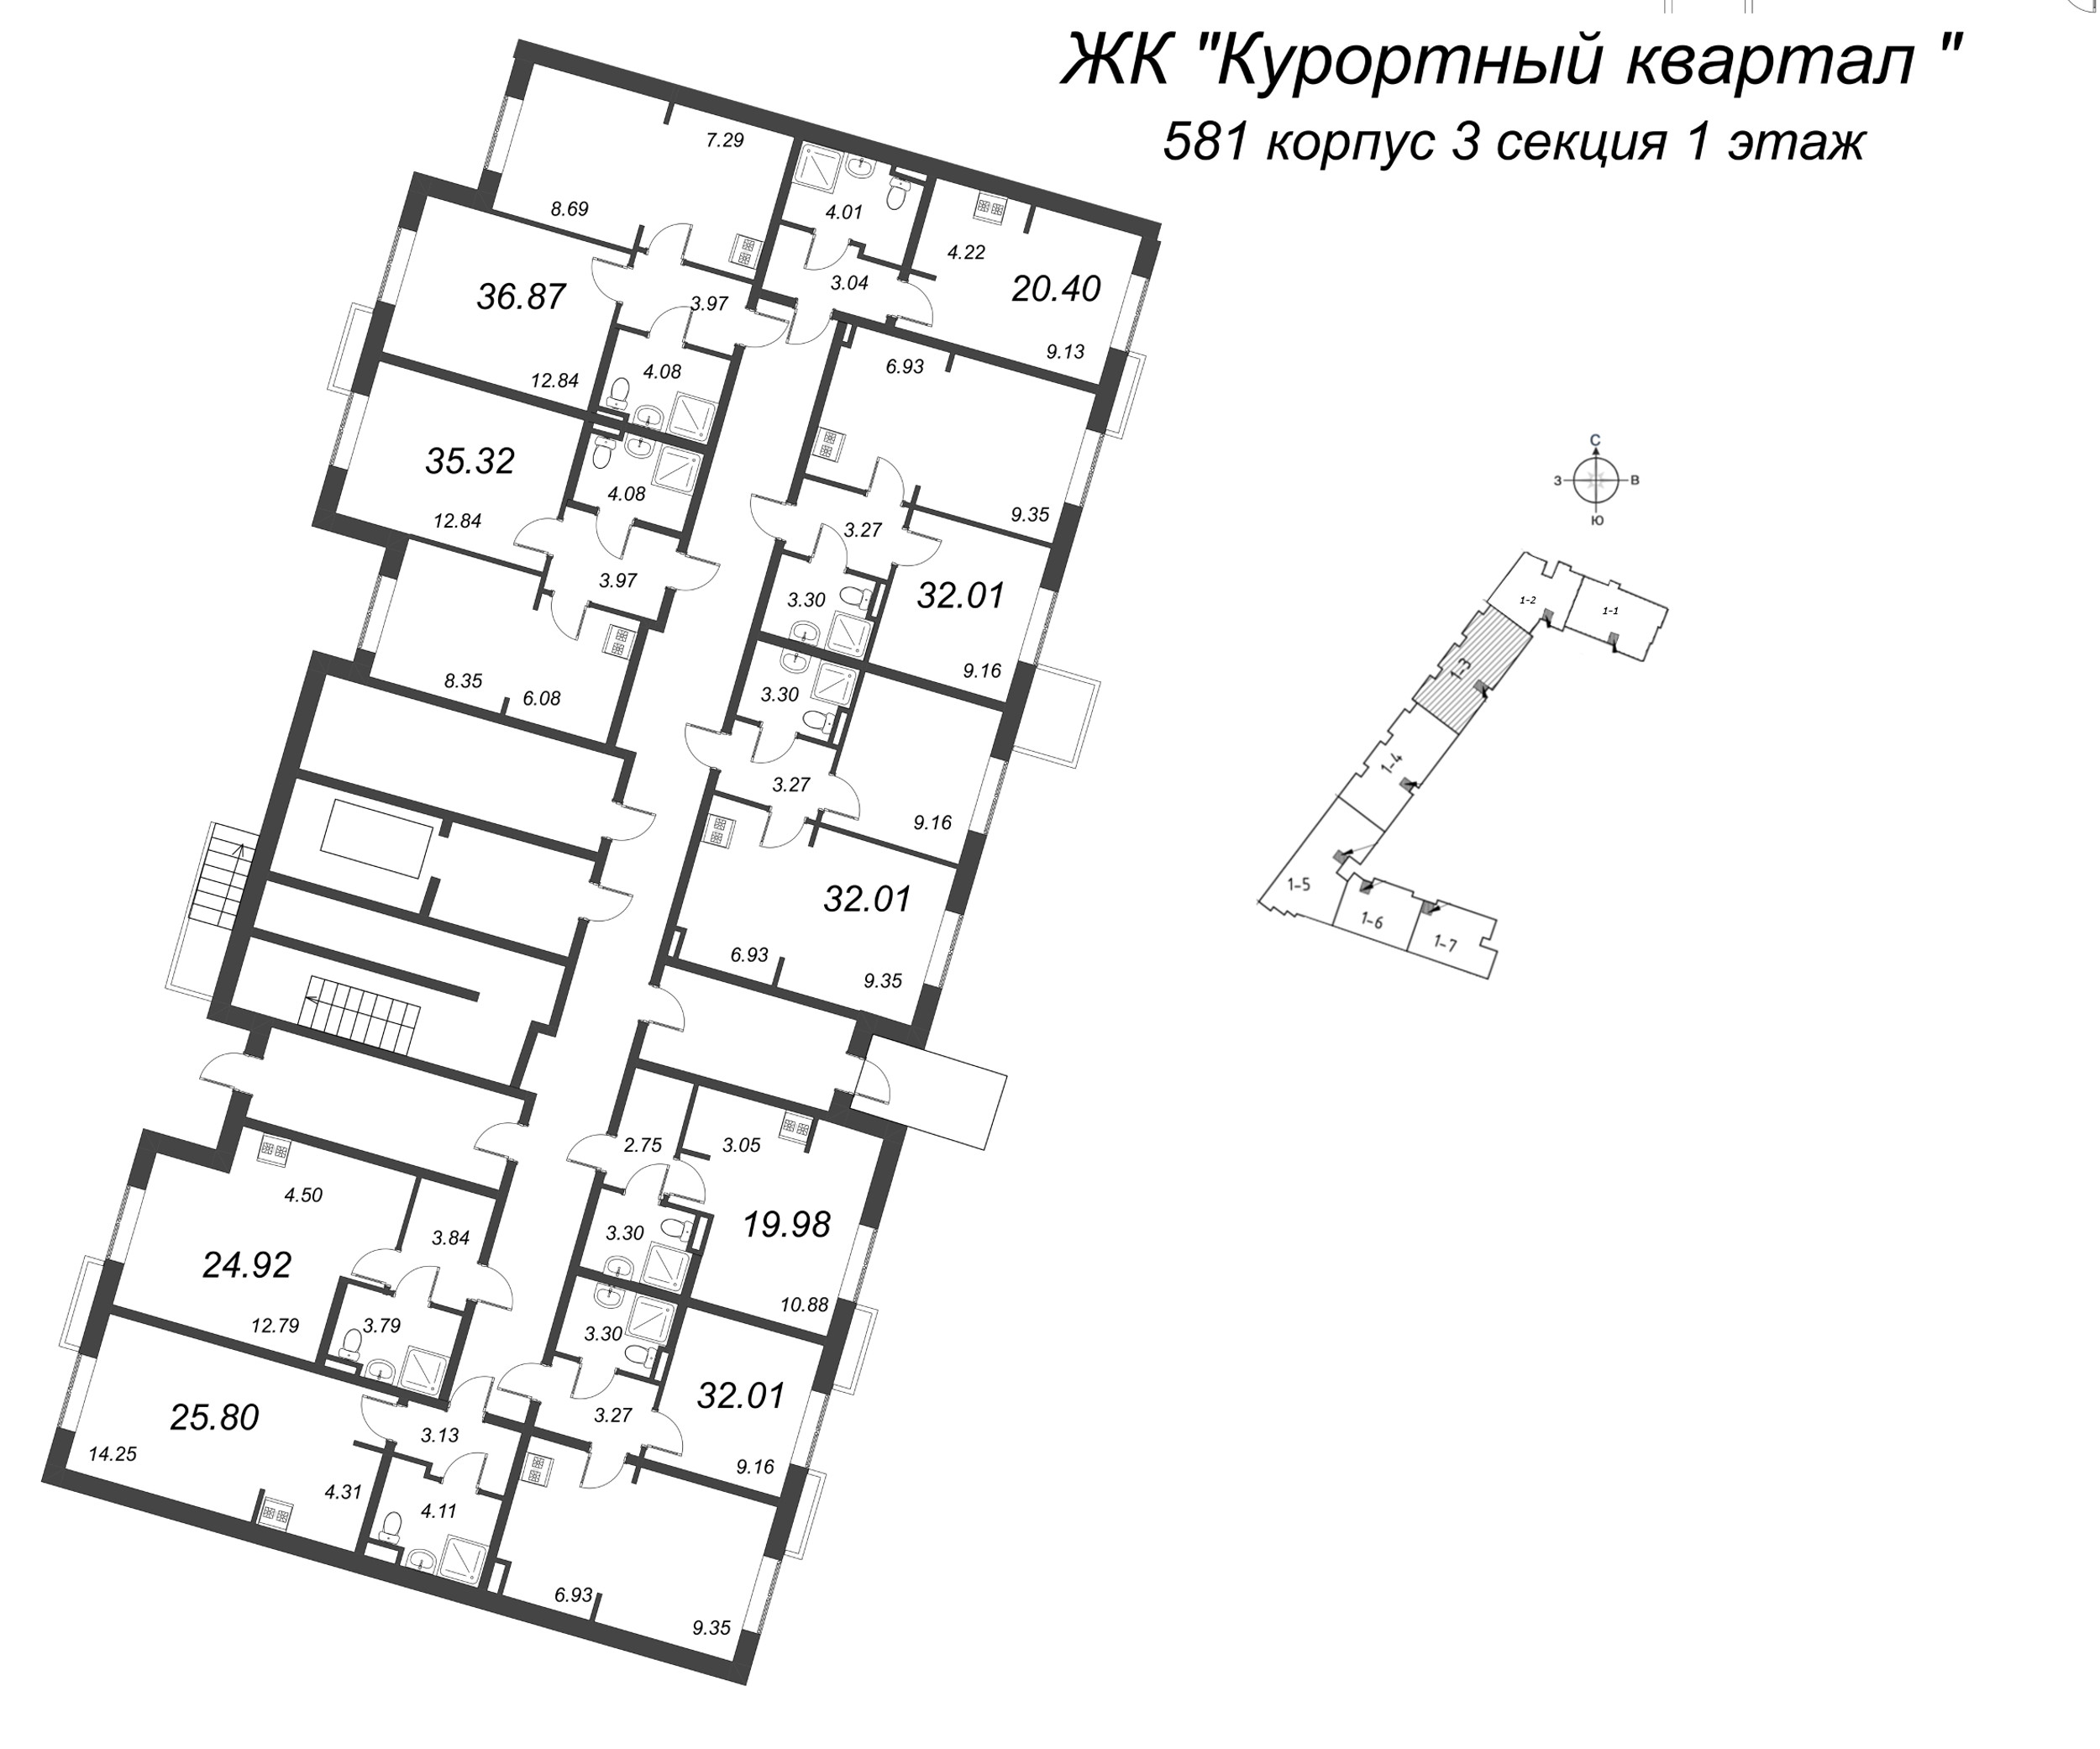 2-комнатная (Евро) квартира, 32.01 м² - планировка этажа